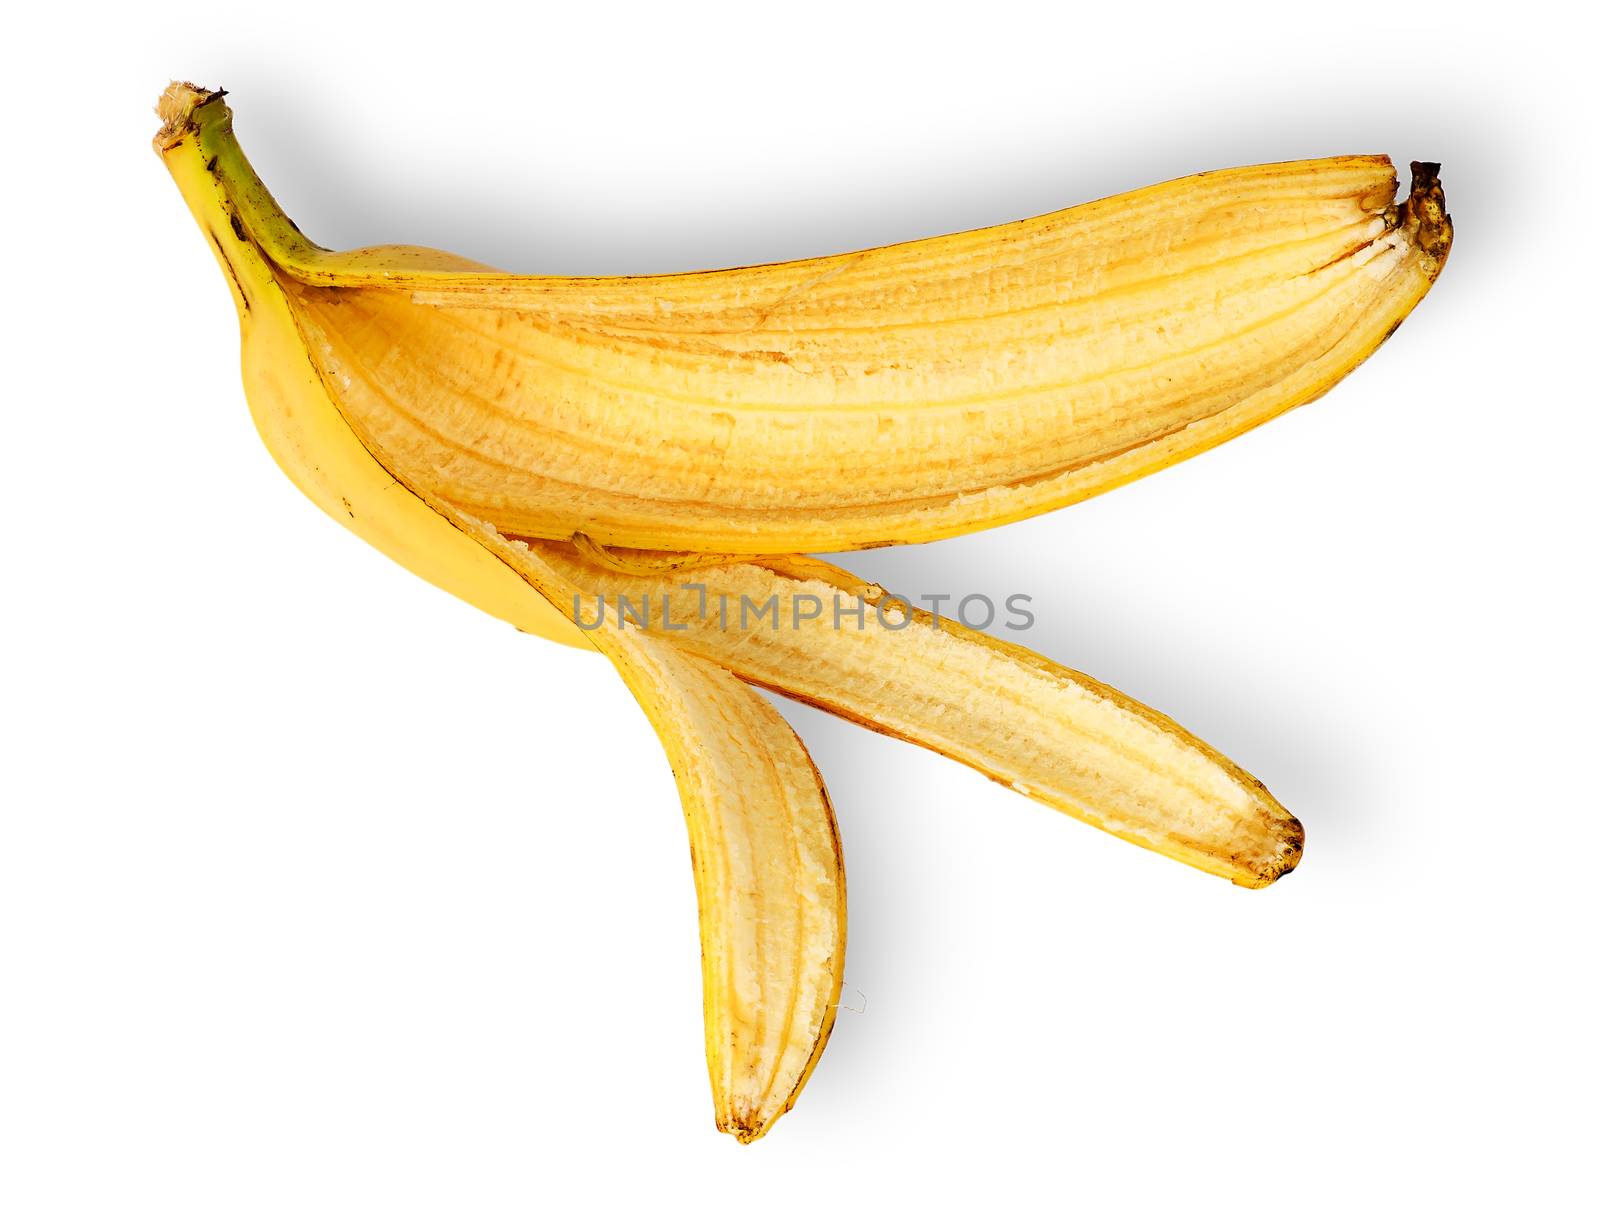 Banana skin deployed horizontally by Cipariss